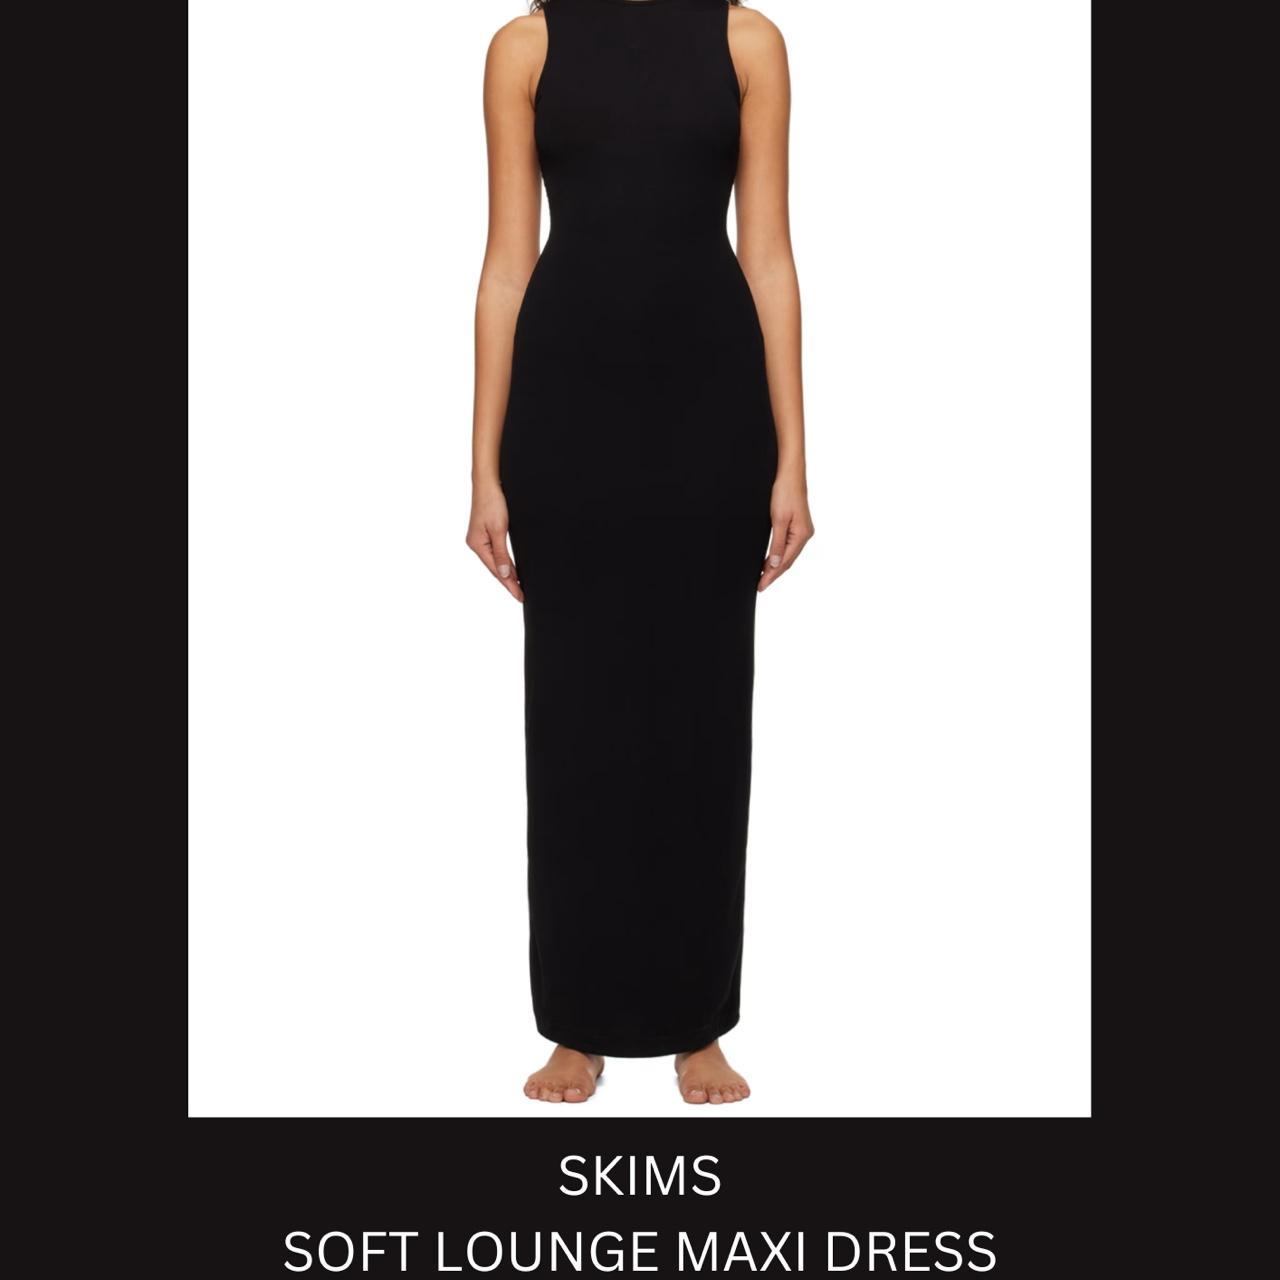 Skims Soft Lounge Maxi Dress